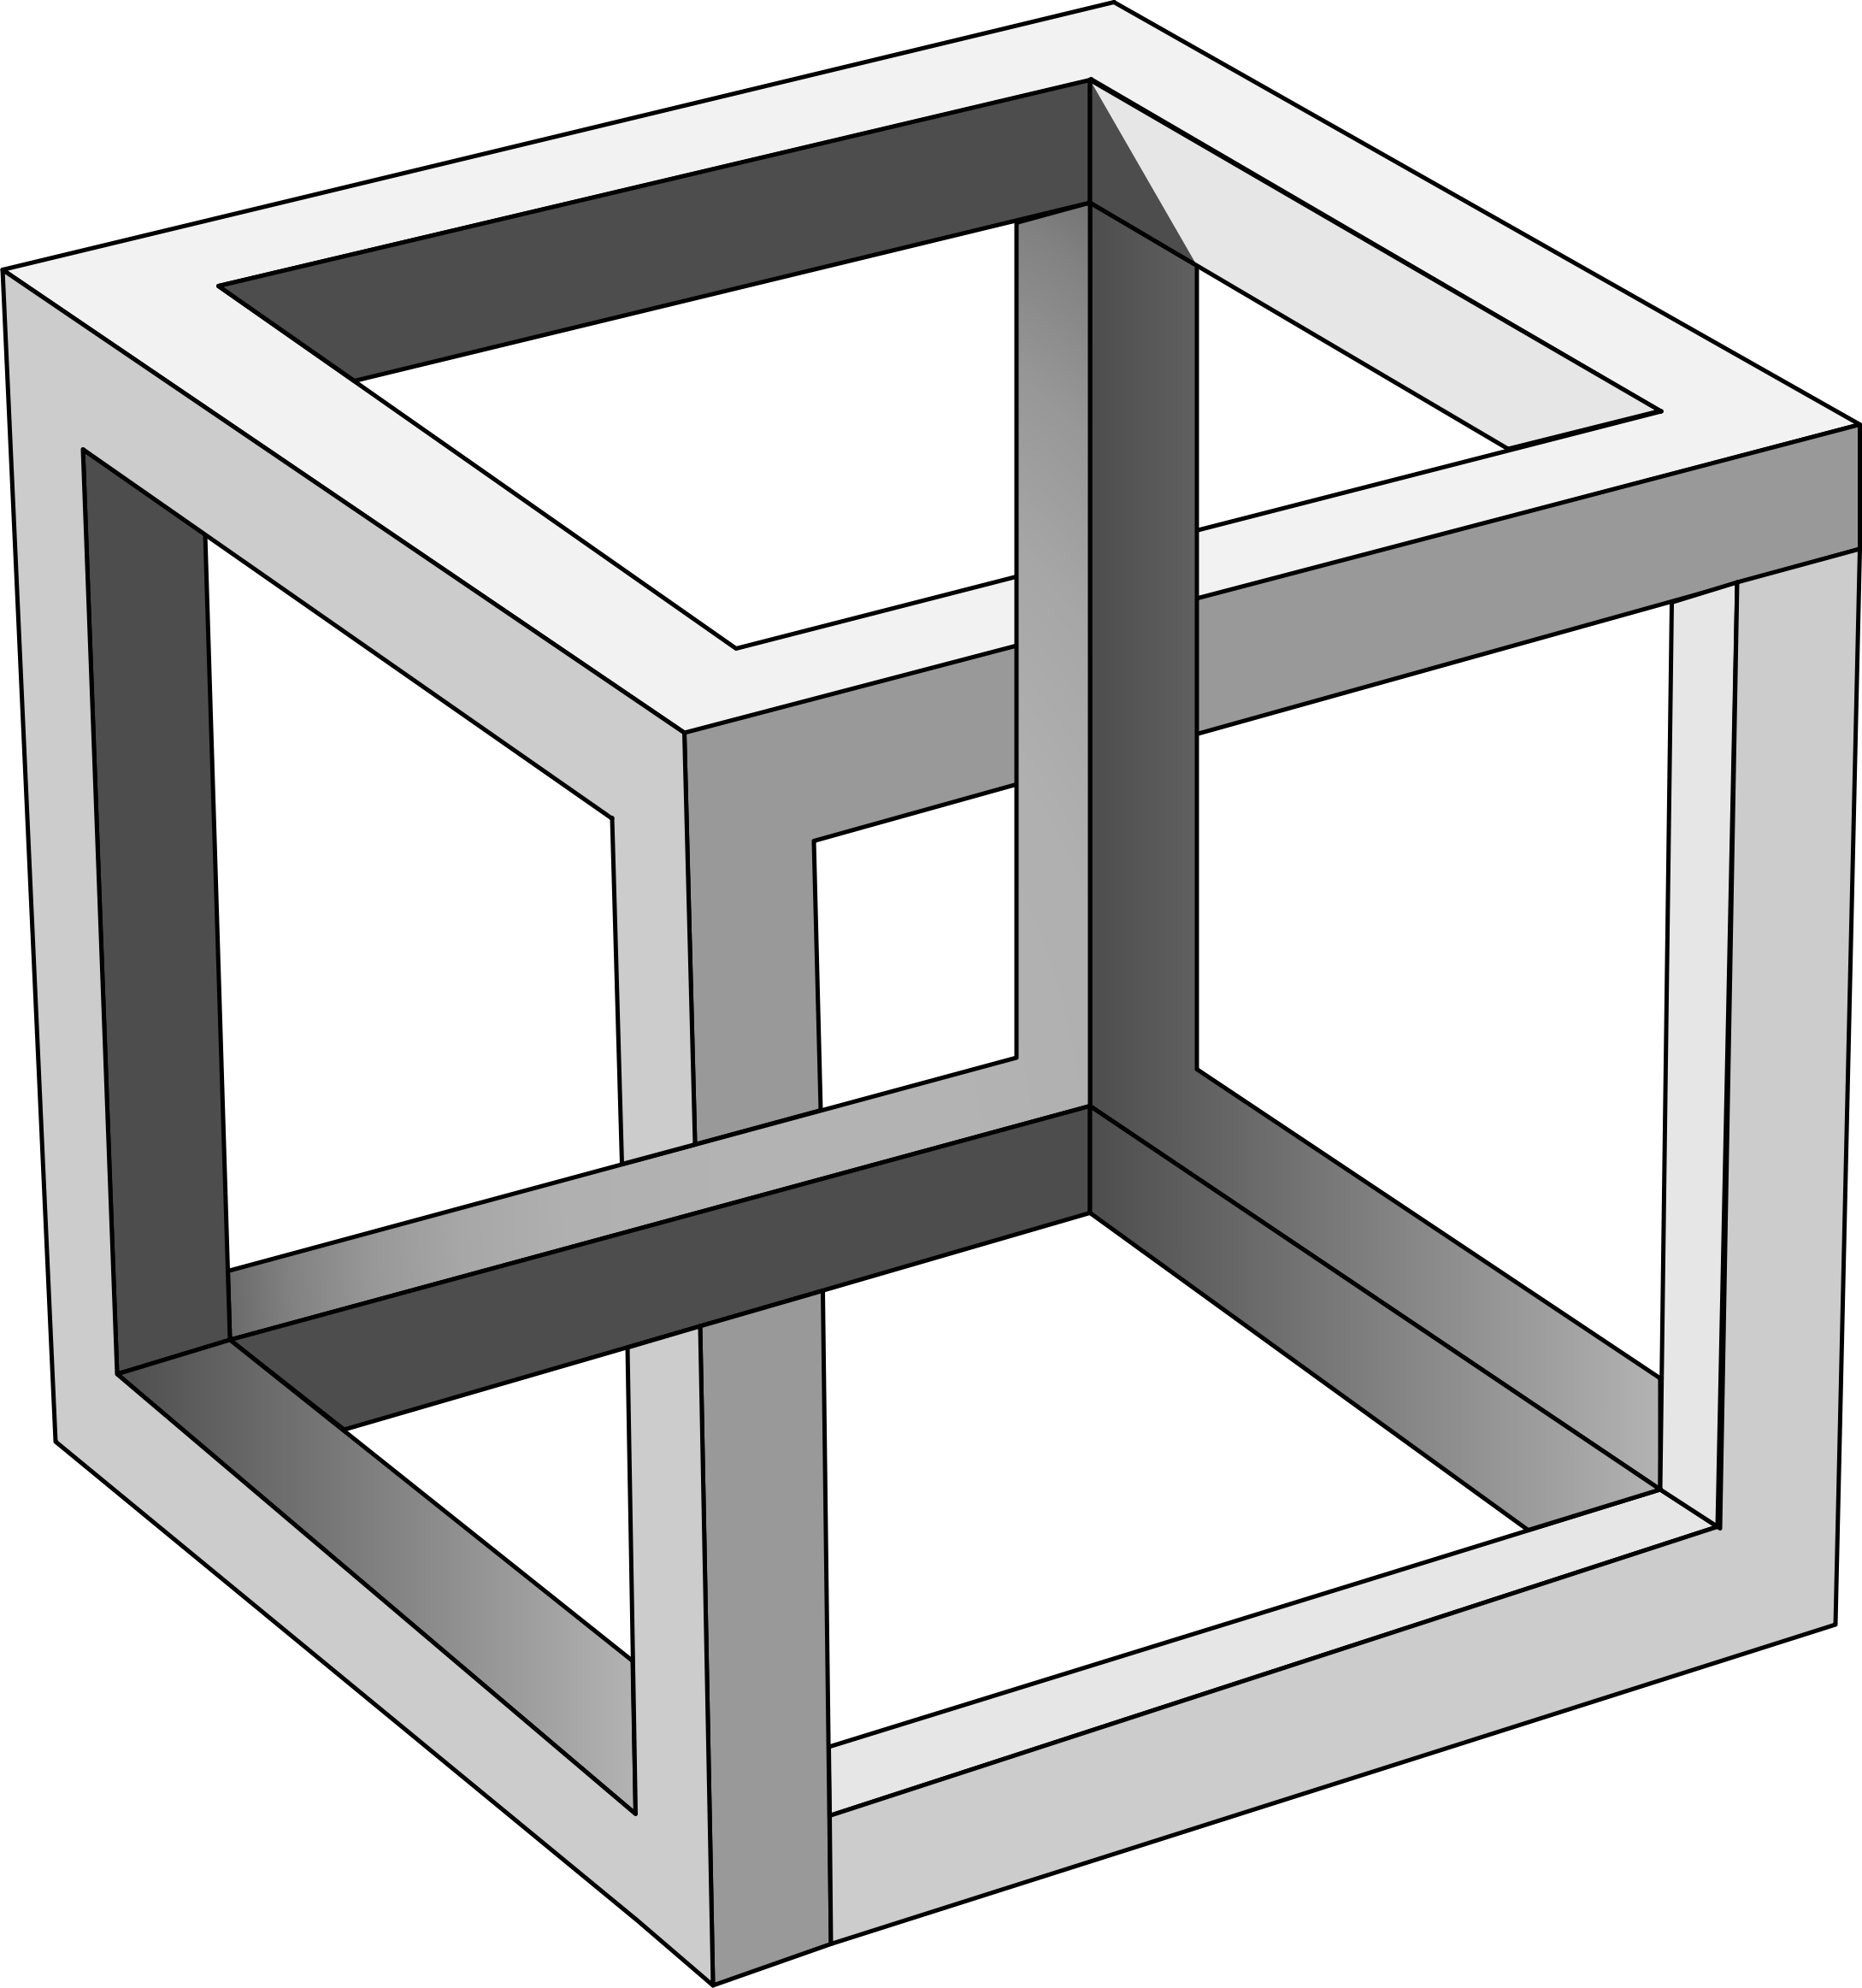 cube clipart gray